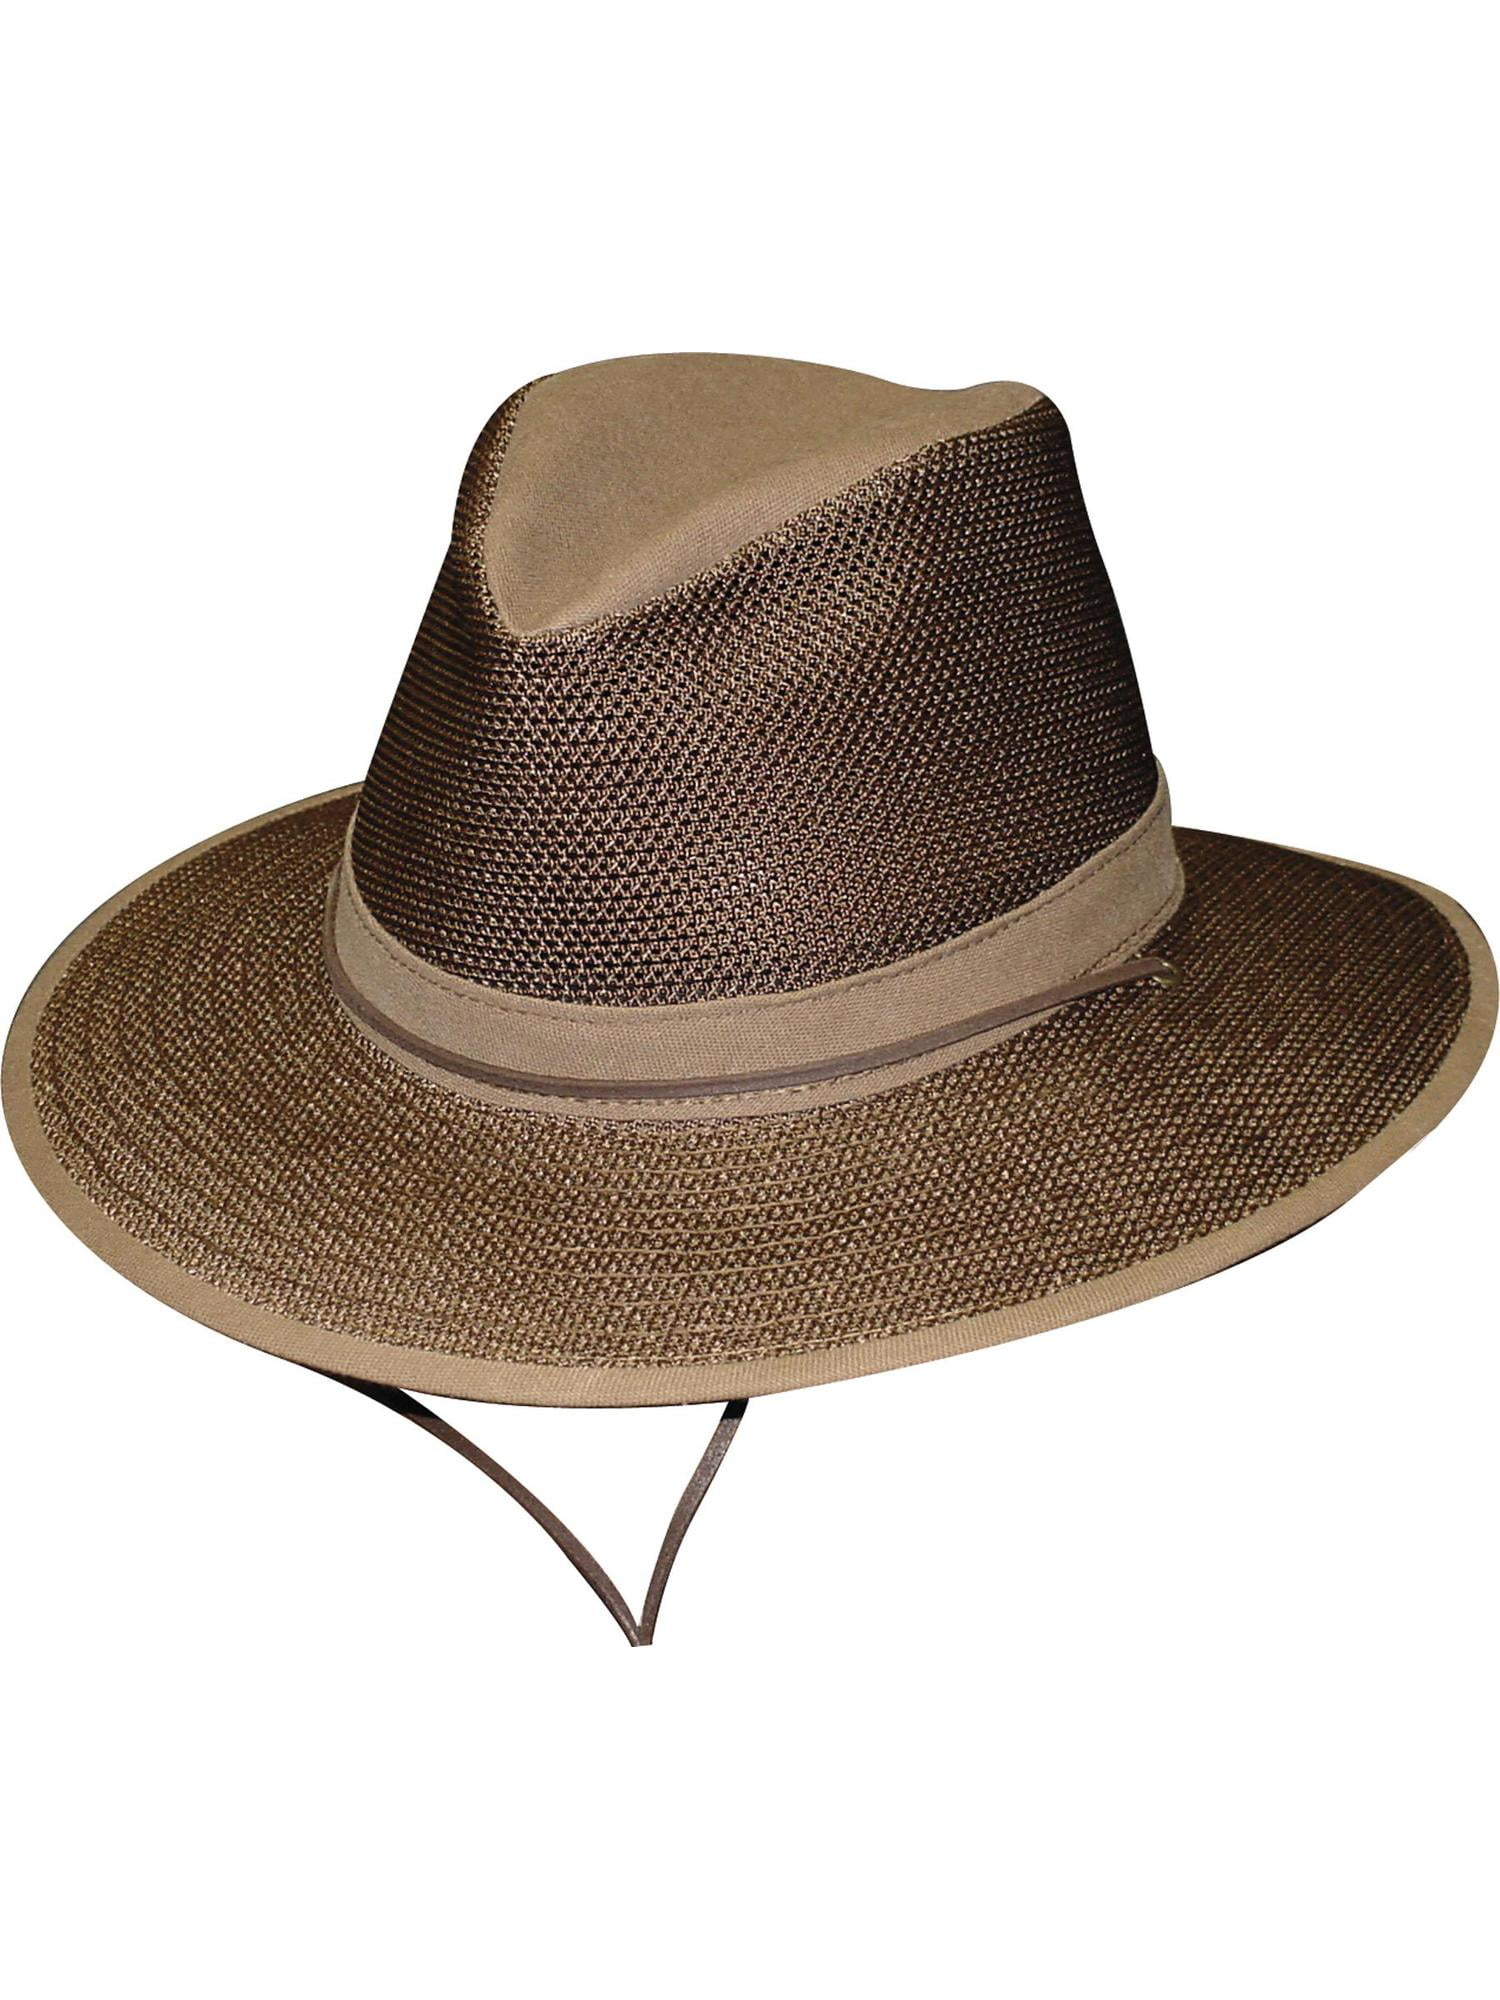 Henschel Polycotton Packable Mesh Breezer Safari Hat (Men's